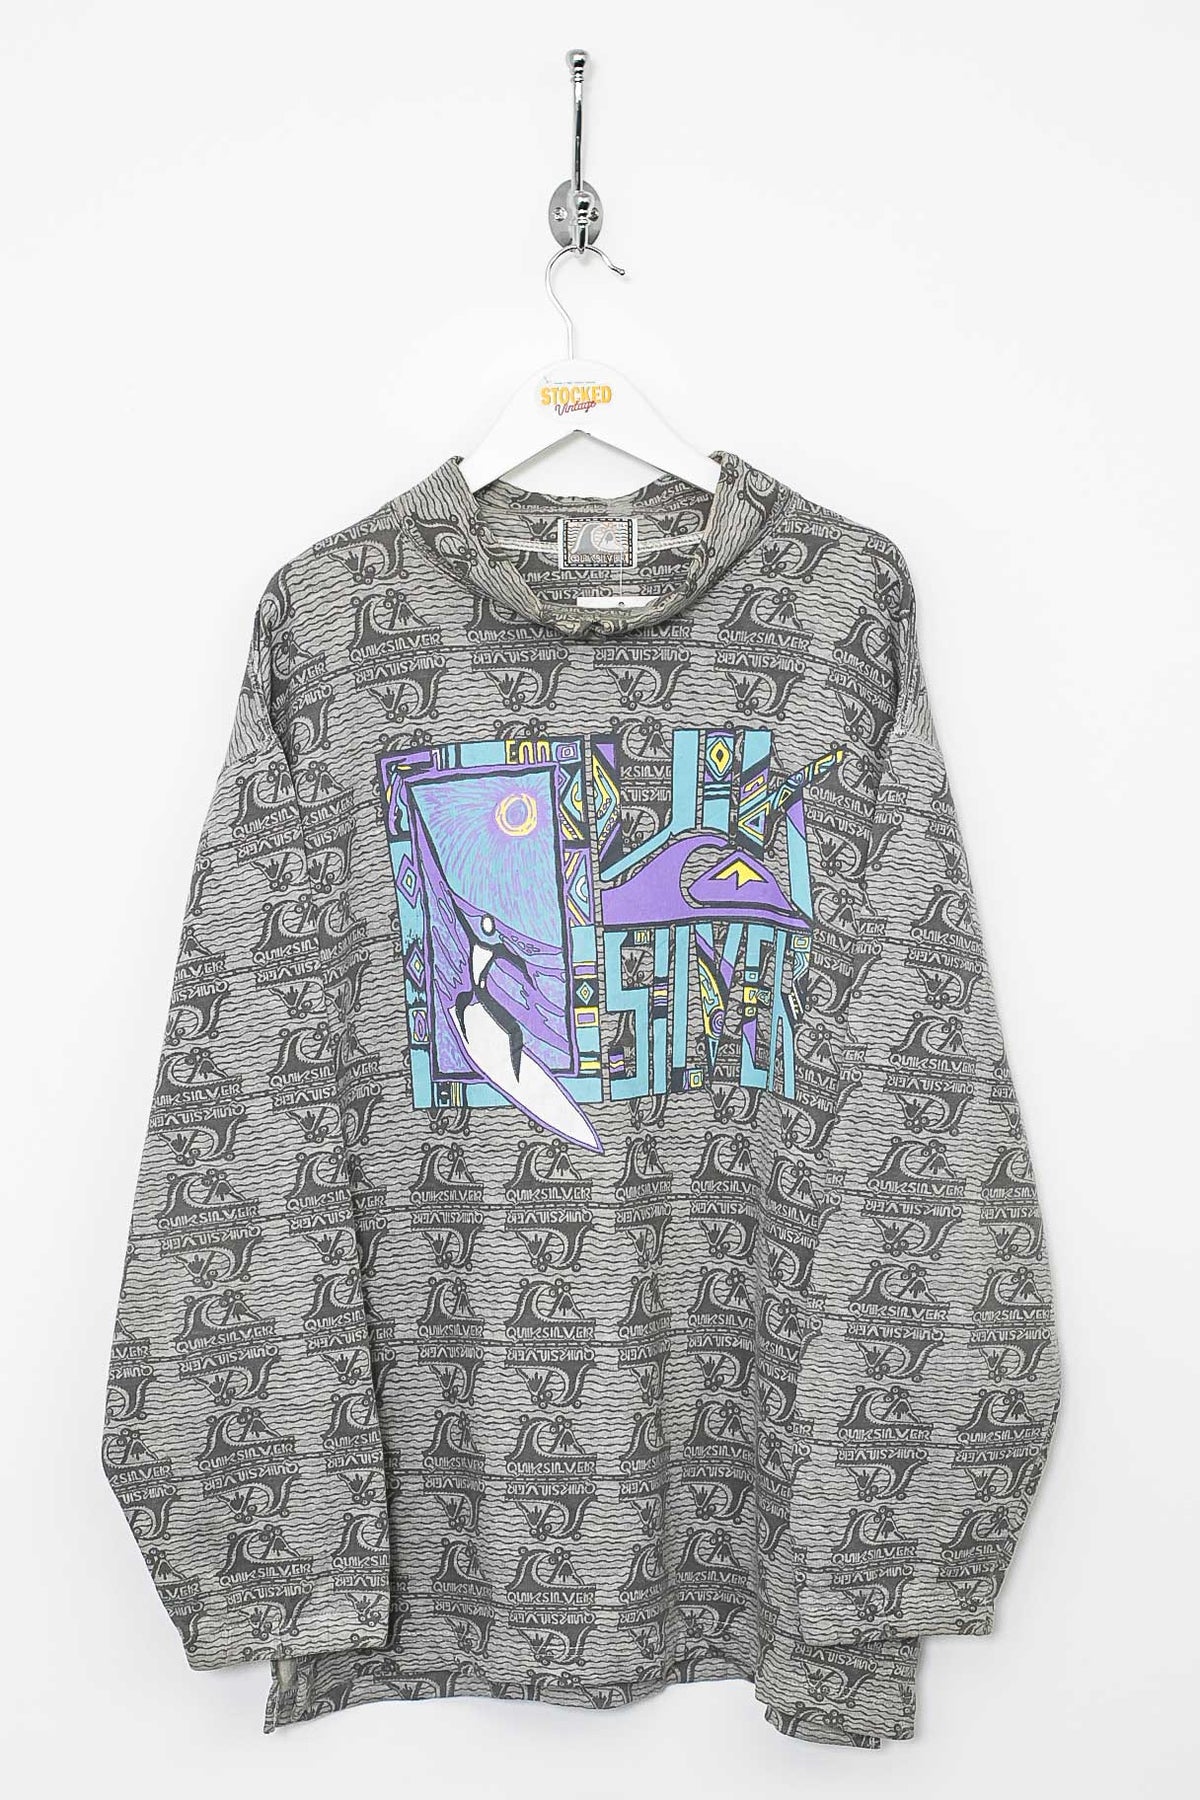 90s Quicksilver Sweatshirt (L)